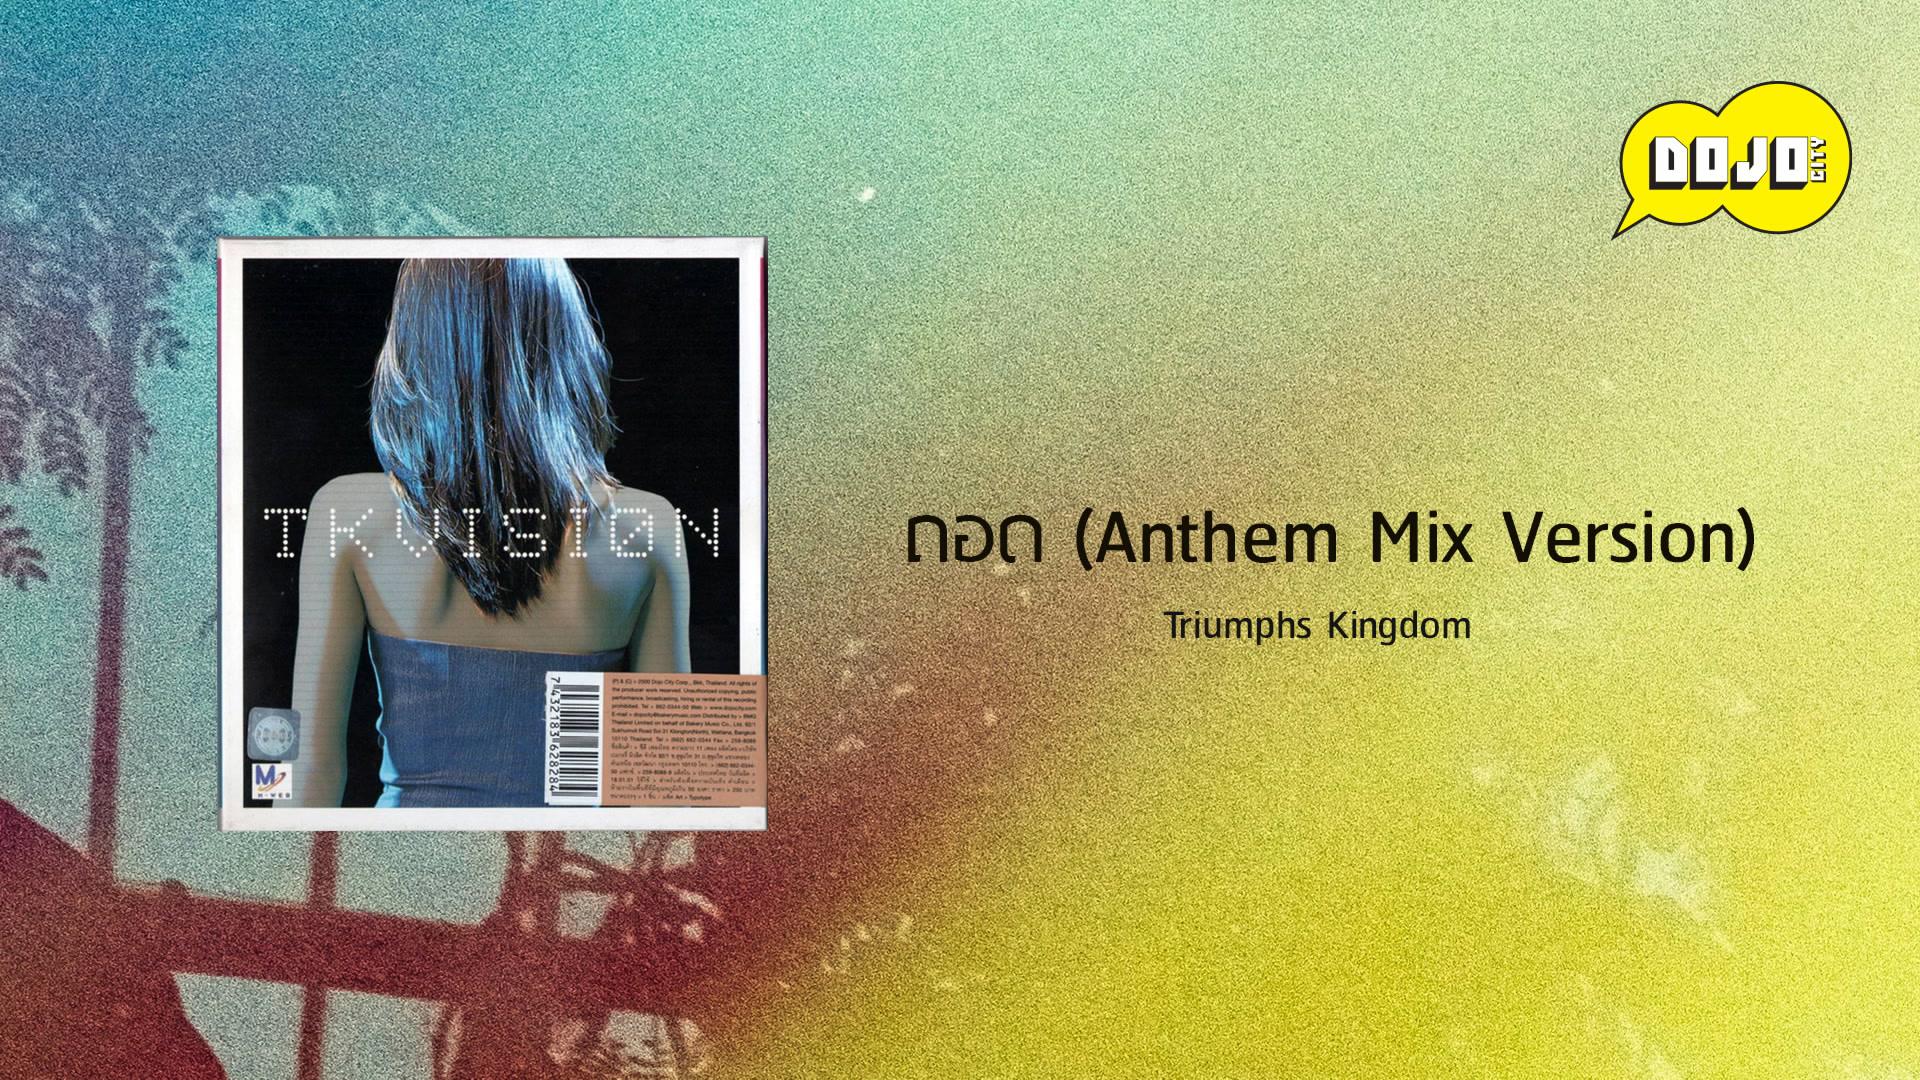 Triumphs Kingdom - ถอด (Off) (Anthem Mix Version)